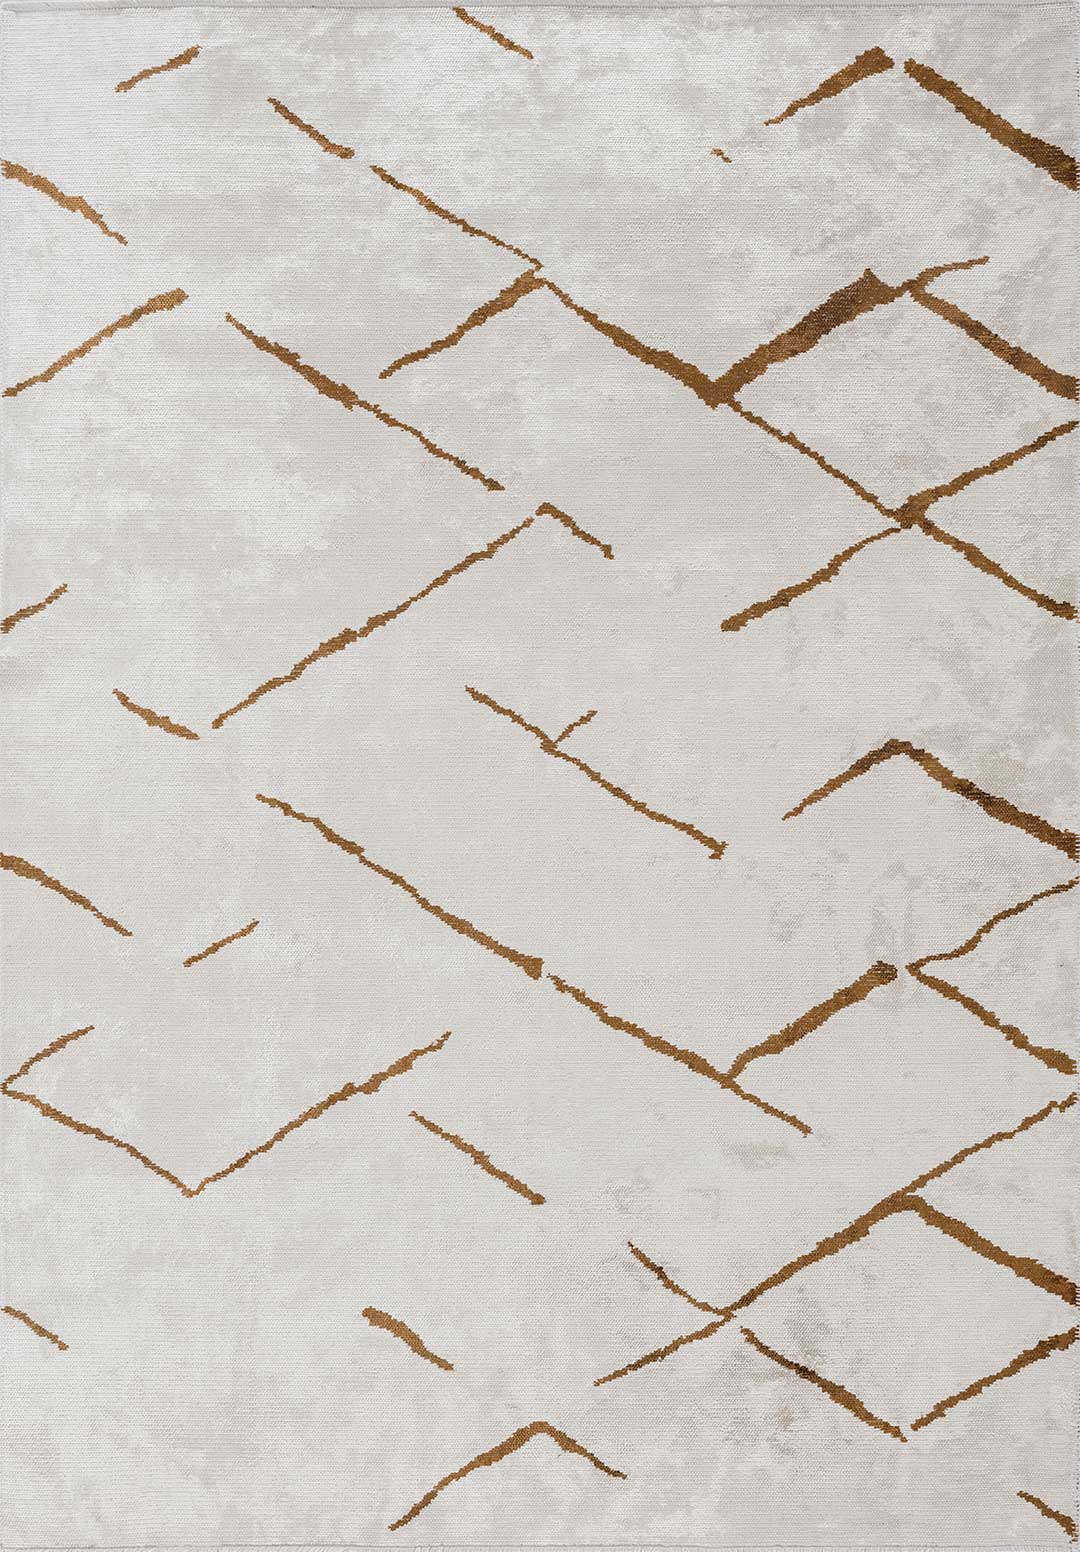 Wave Cacao - White Rug Rugs - Venetto Design Venettodesign.com